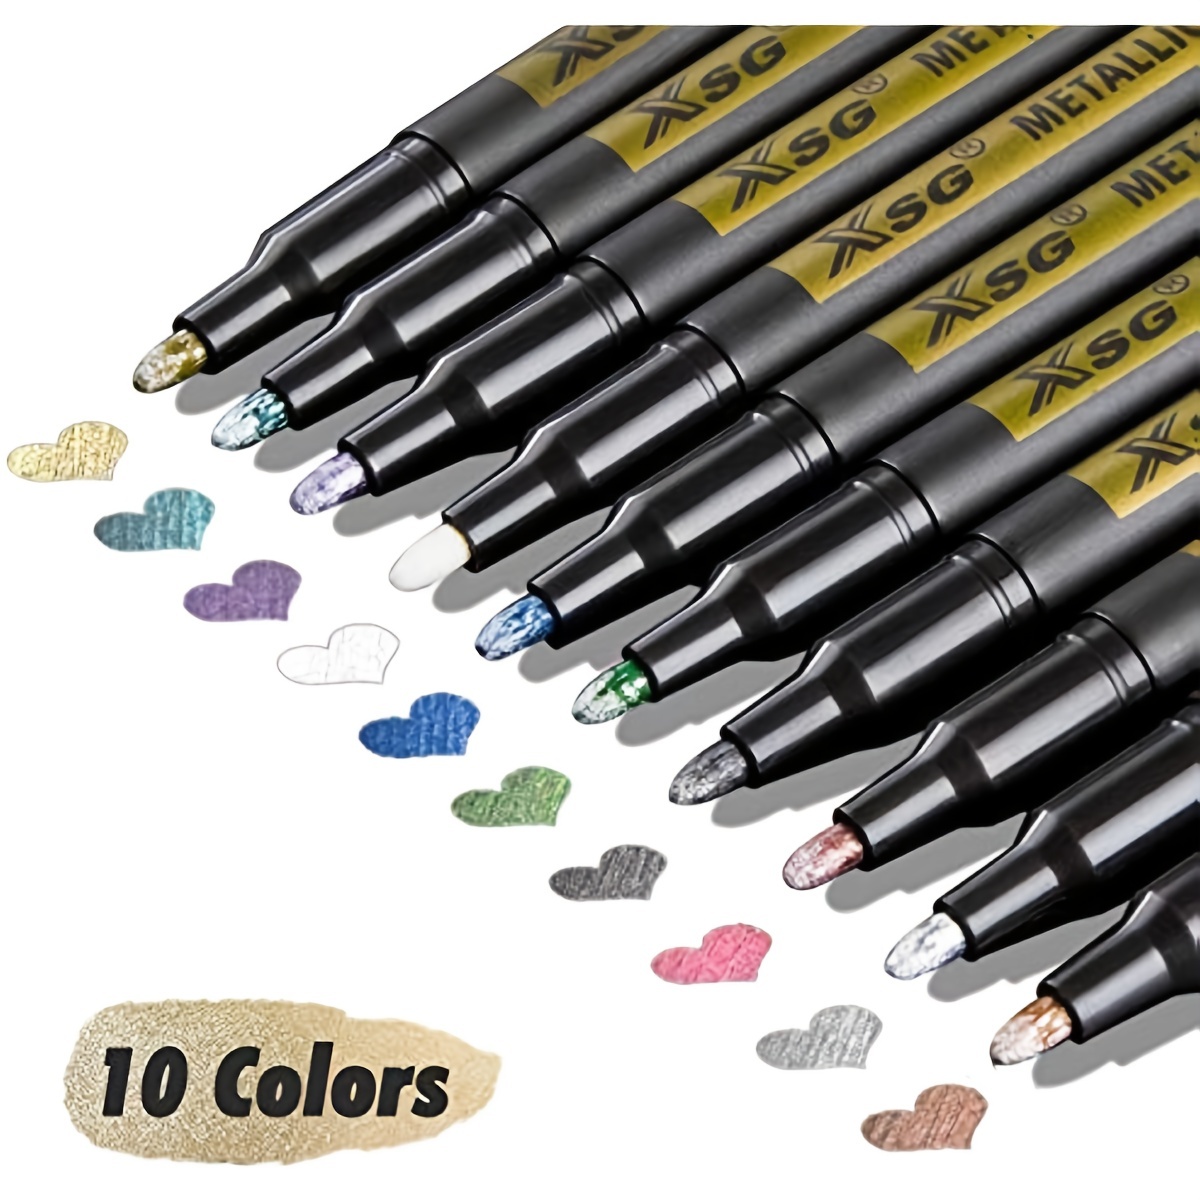 Mr. Pen- Metallic Paint Markers,10 Colors, Metallic Markers for Black  Paper, Rock Painting, Card Making, Ceramics, Metal, Glass, DIY Photo Album